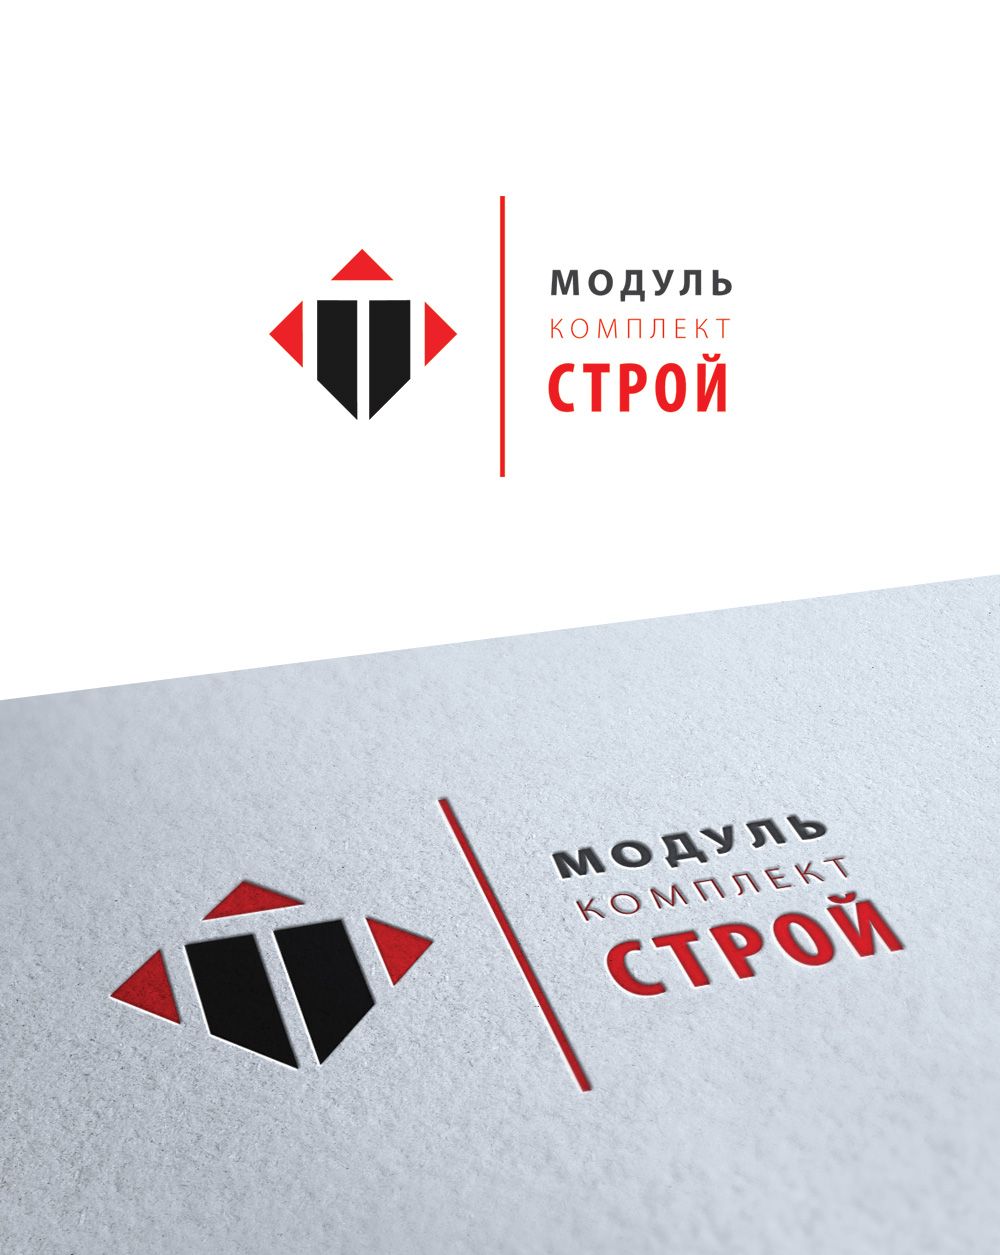 Логотип для МодульКомплектСтрой, МКС - дизайнер GreenRed